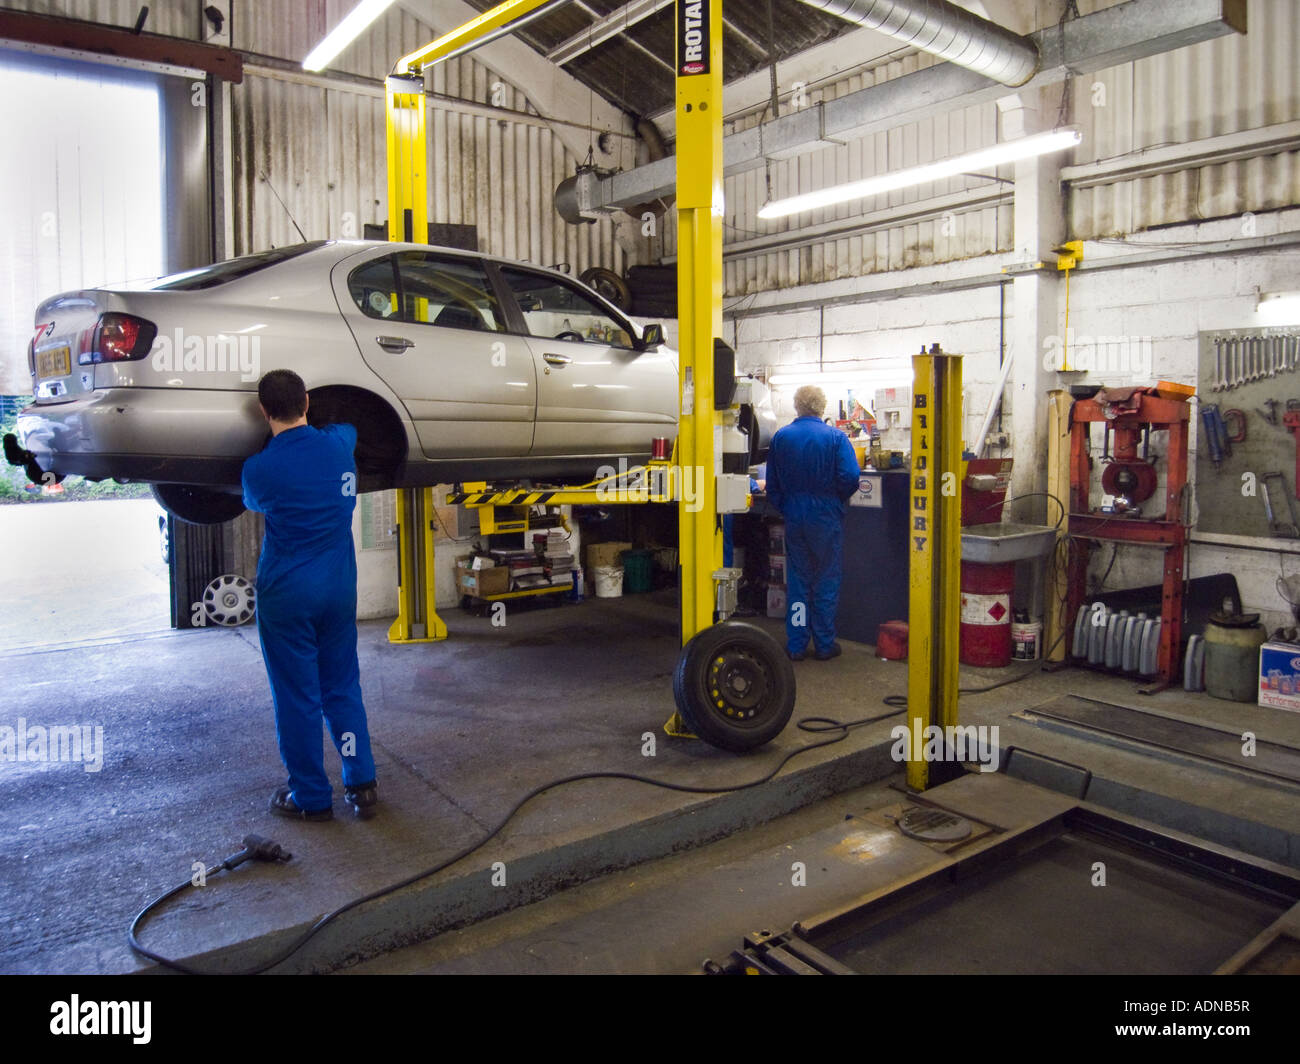 2 car mechanics working in a repair garage with hydraulic car lift ... - 2 Car Mechanics Working In A Repair Garage With HyDraulic Car Lift ADNB5R